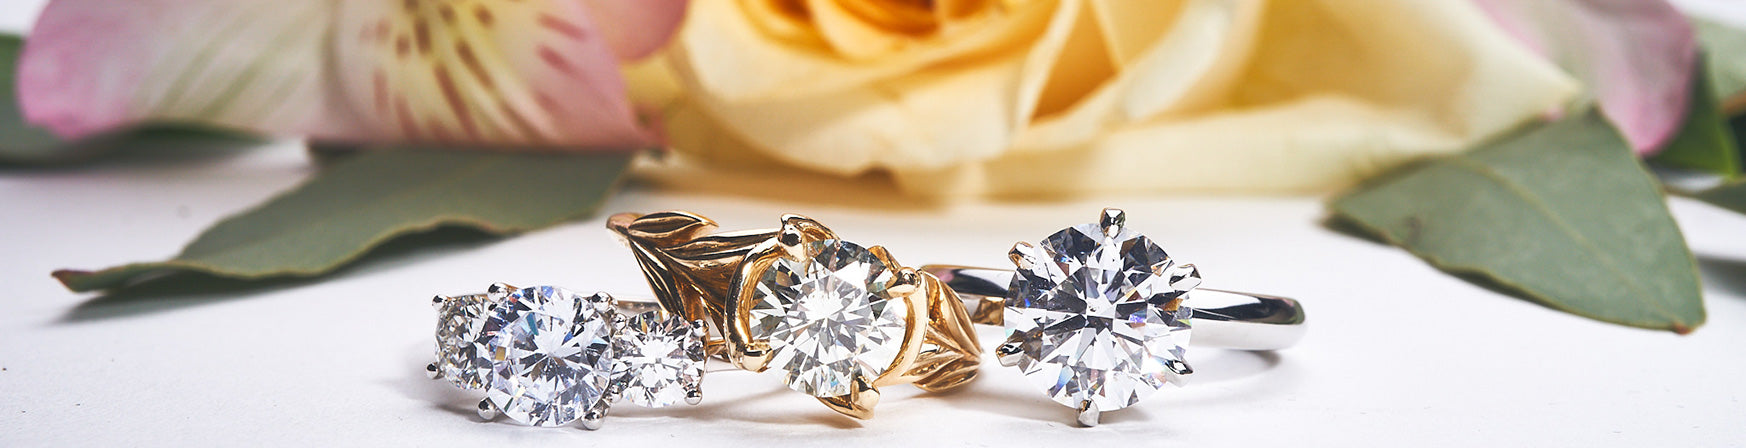 Assorted diamond engagement rings